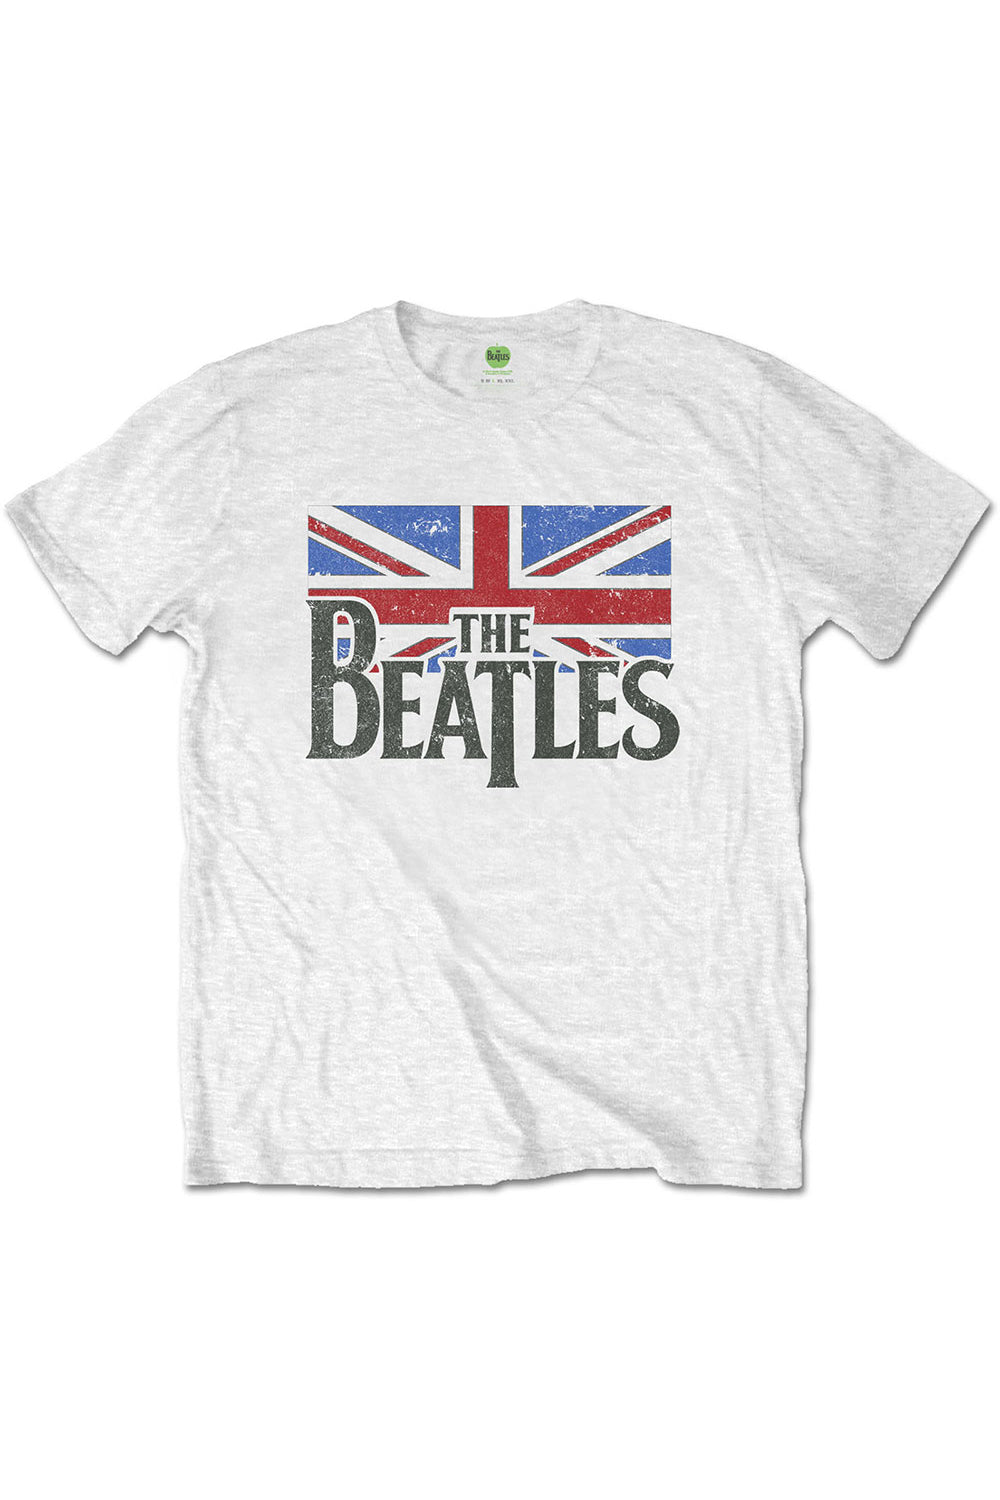 The Beatles white logo & vintage flag t-shirt.